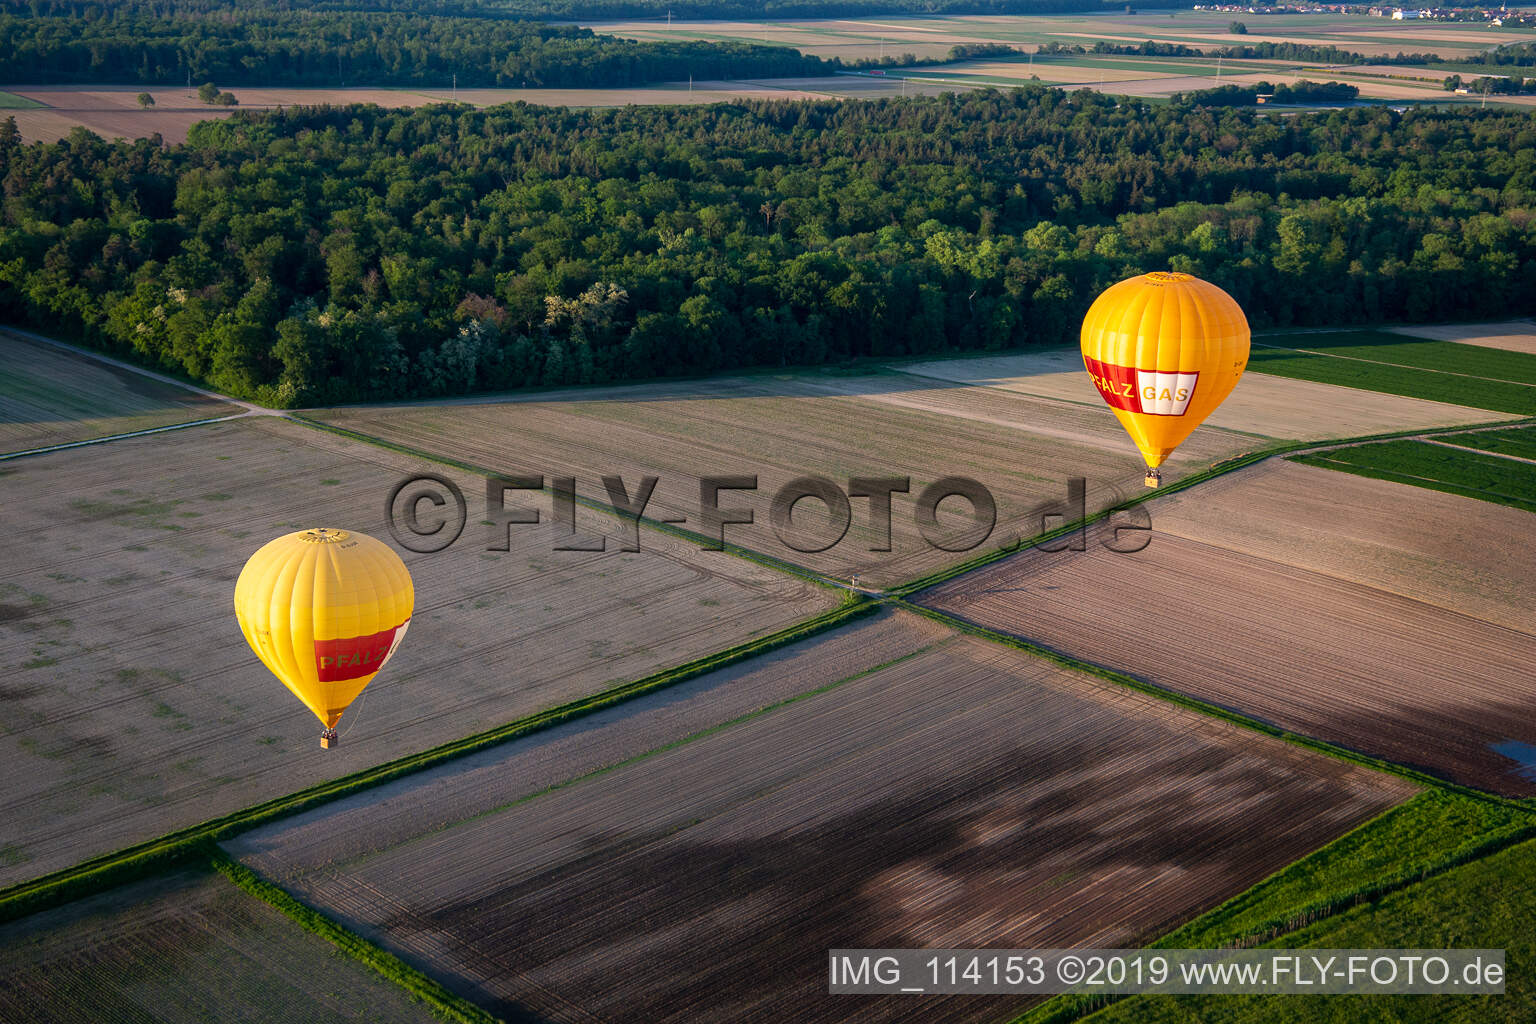 Pfalzgas twin balloons in Steinweiler in the state Rhineland-Palatinate, Germany